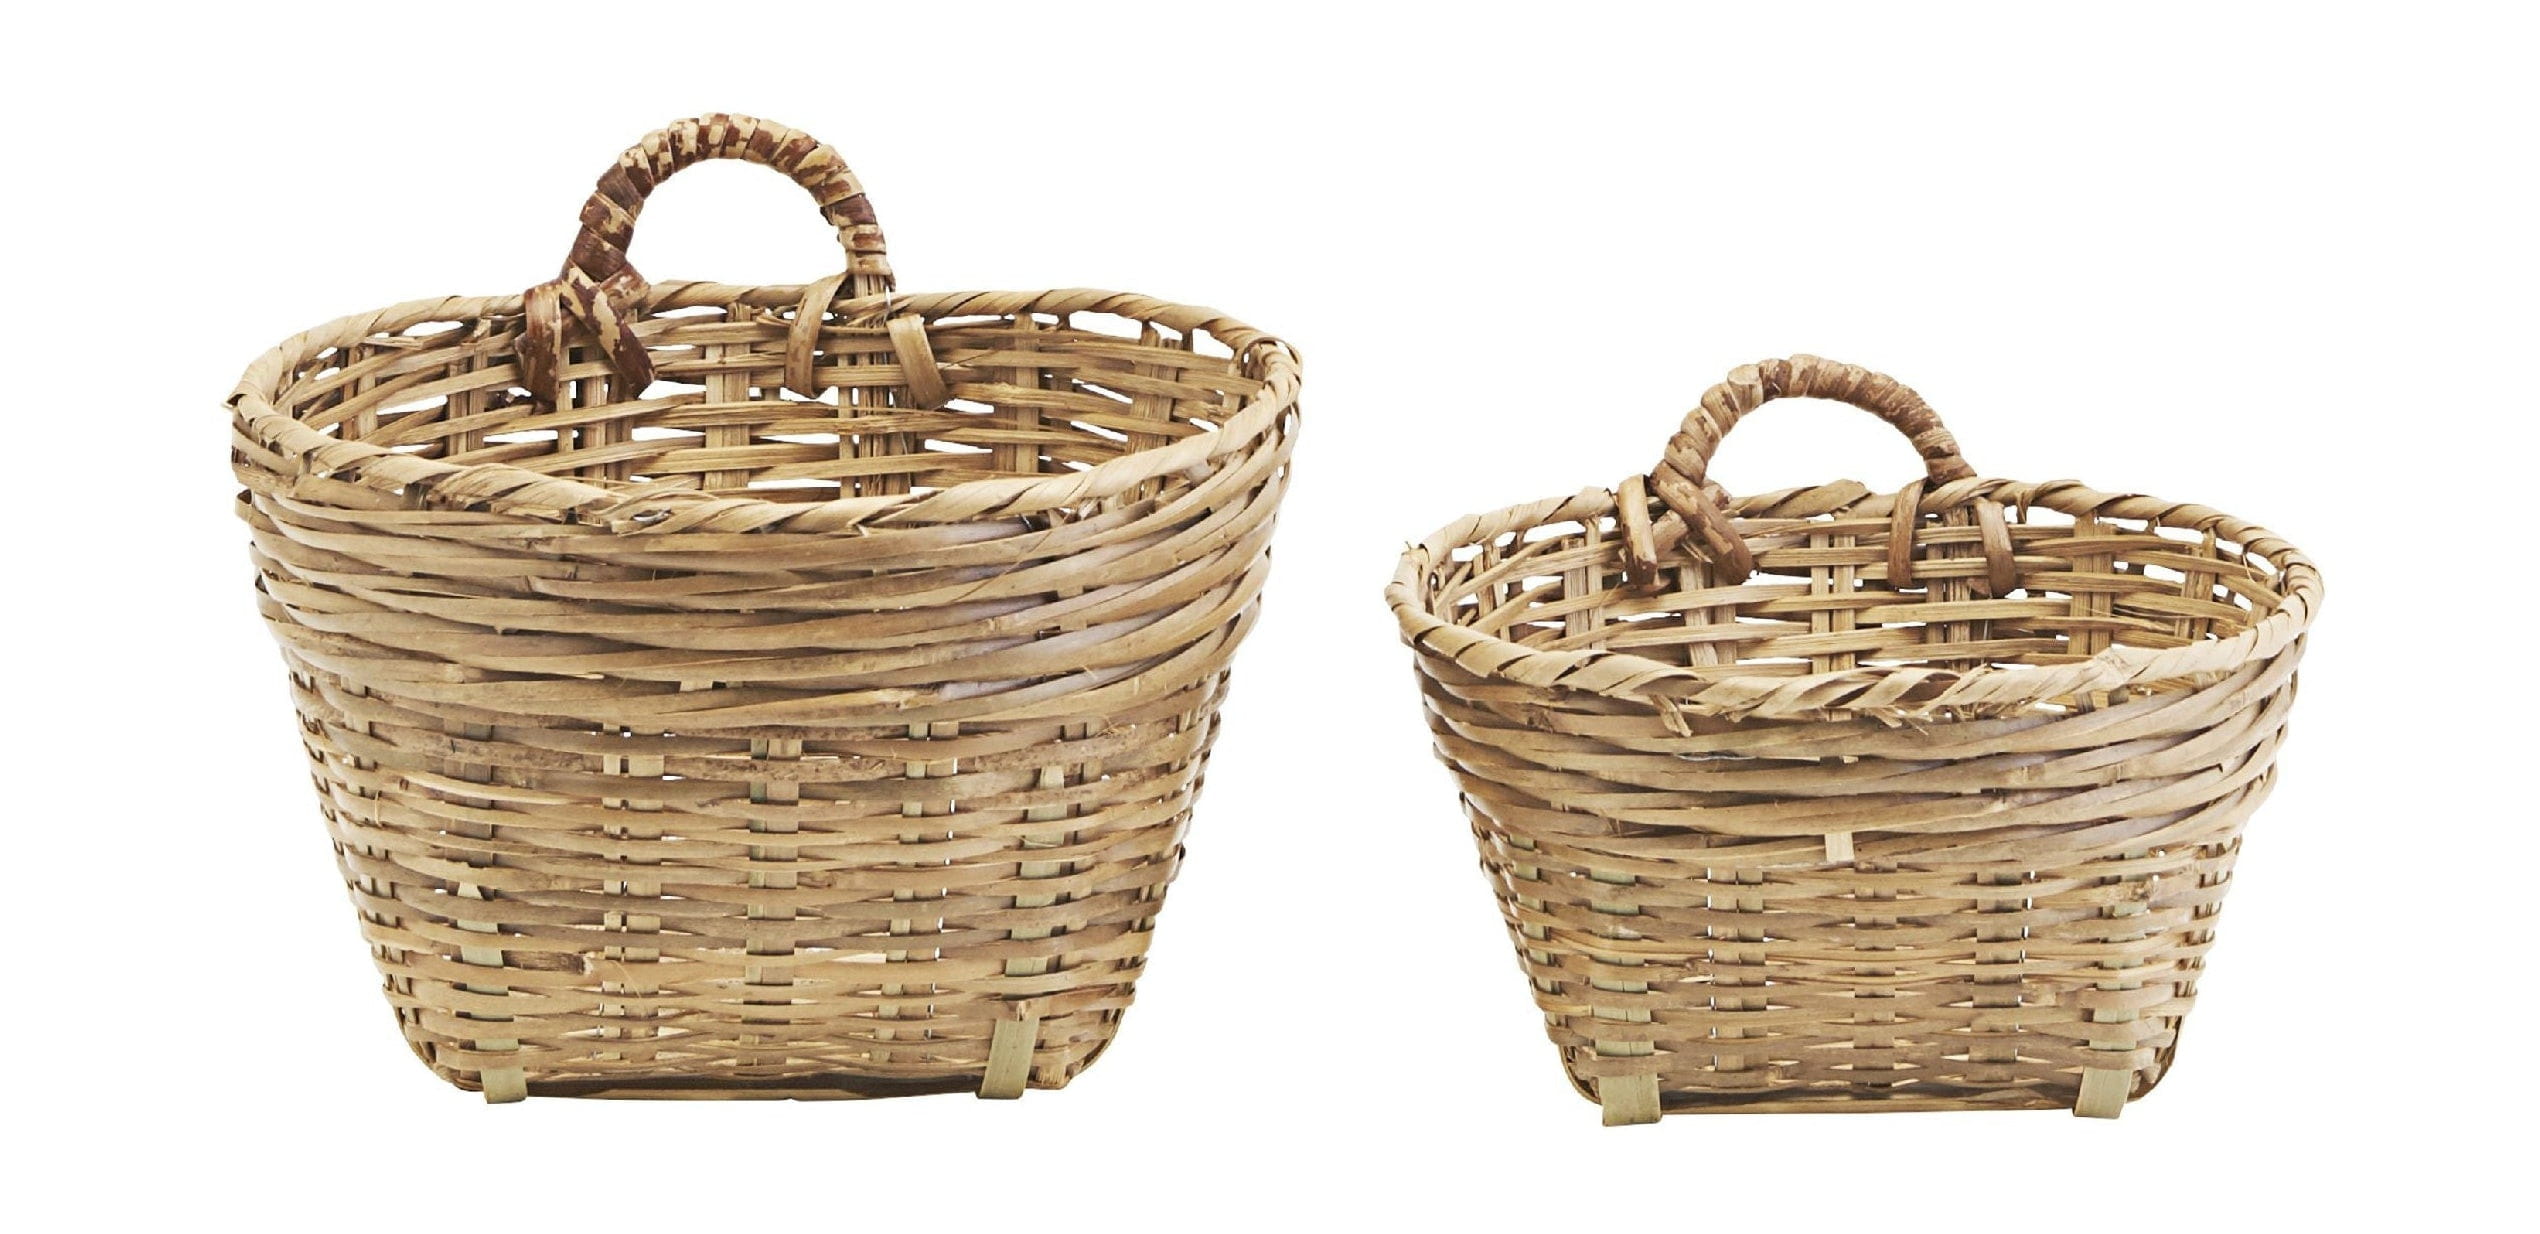 Meraki Tradition Storage Basket Made Of Bamboo Set Of 2, øx H 24x26 & 20x22 Cm